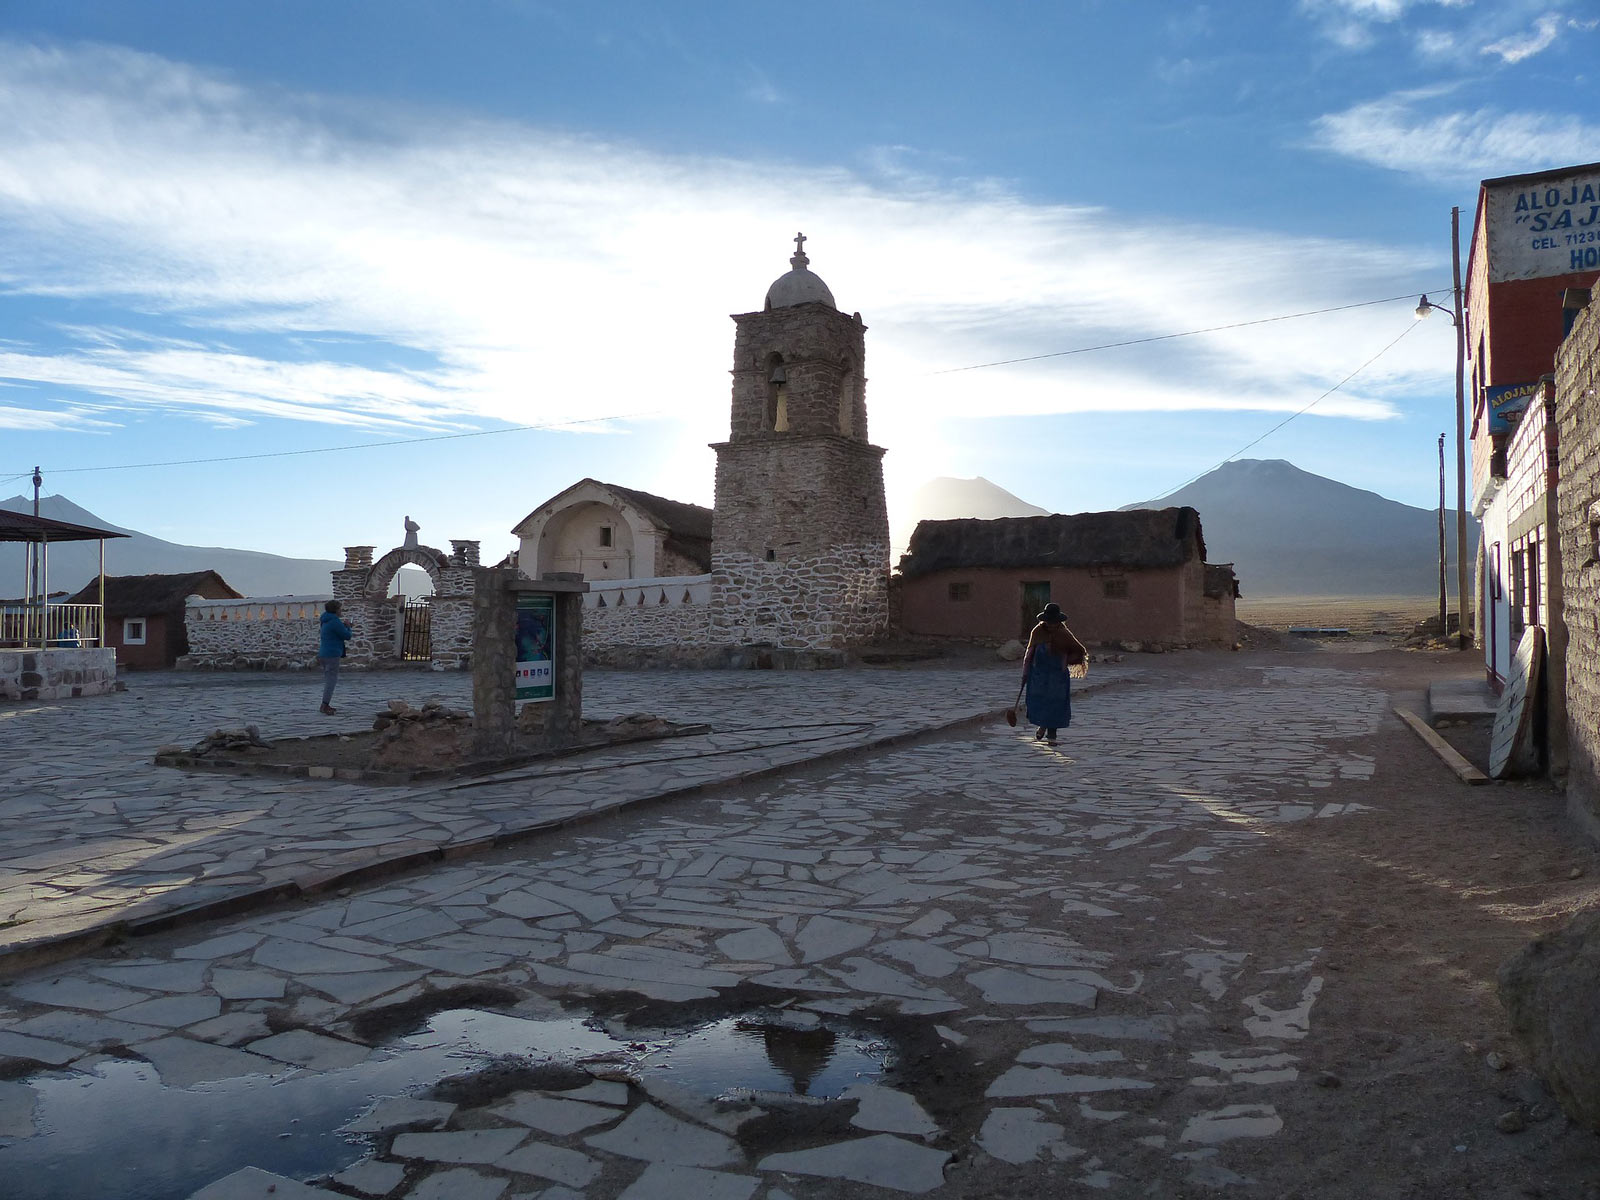 Exploring more of Bolivia